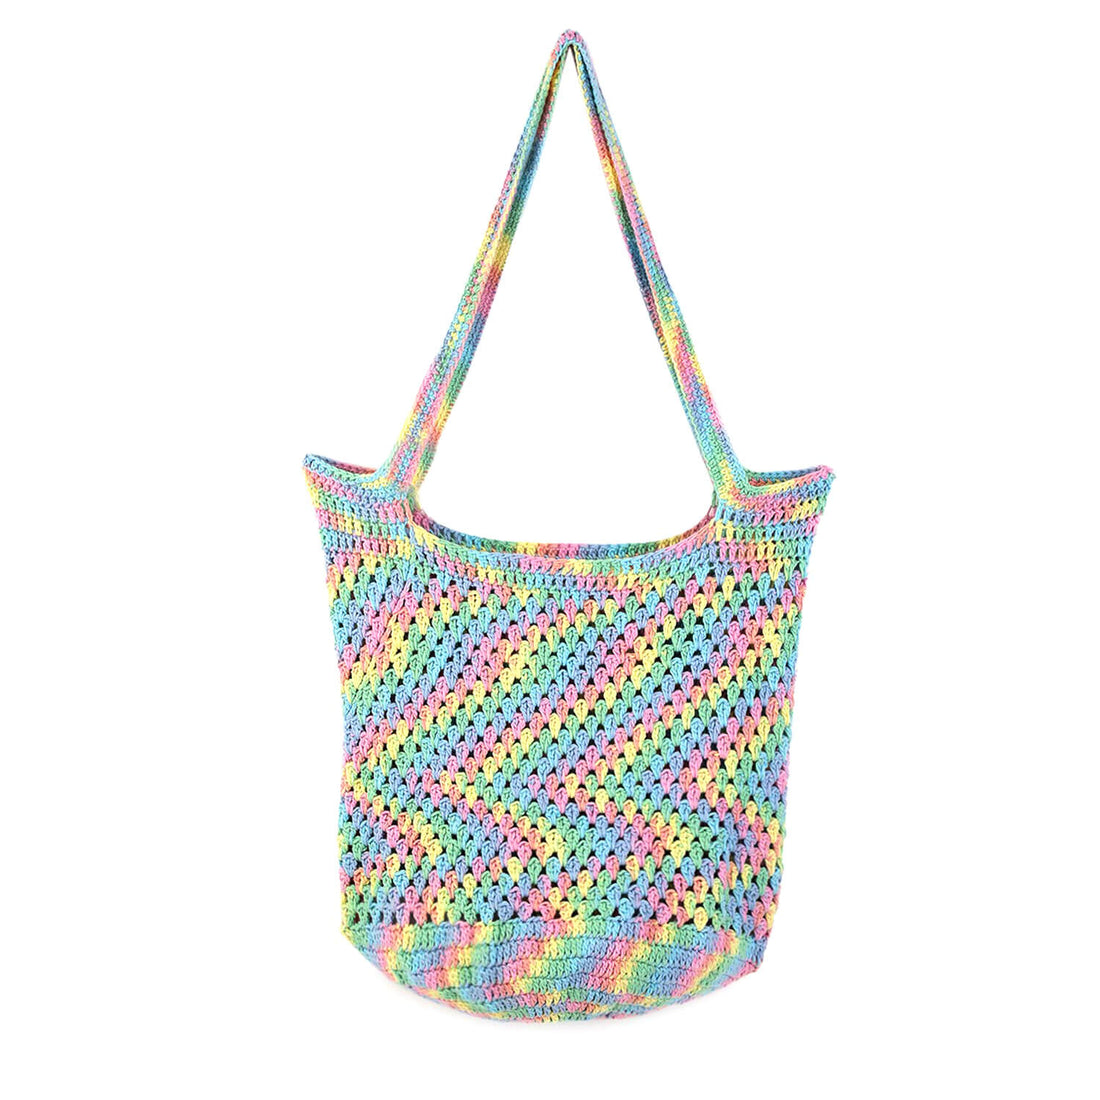 Handmade Crochet Market Bag - Multi-Color 2664